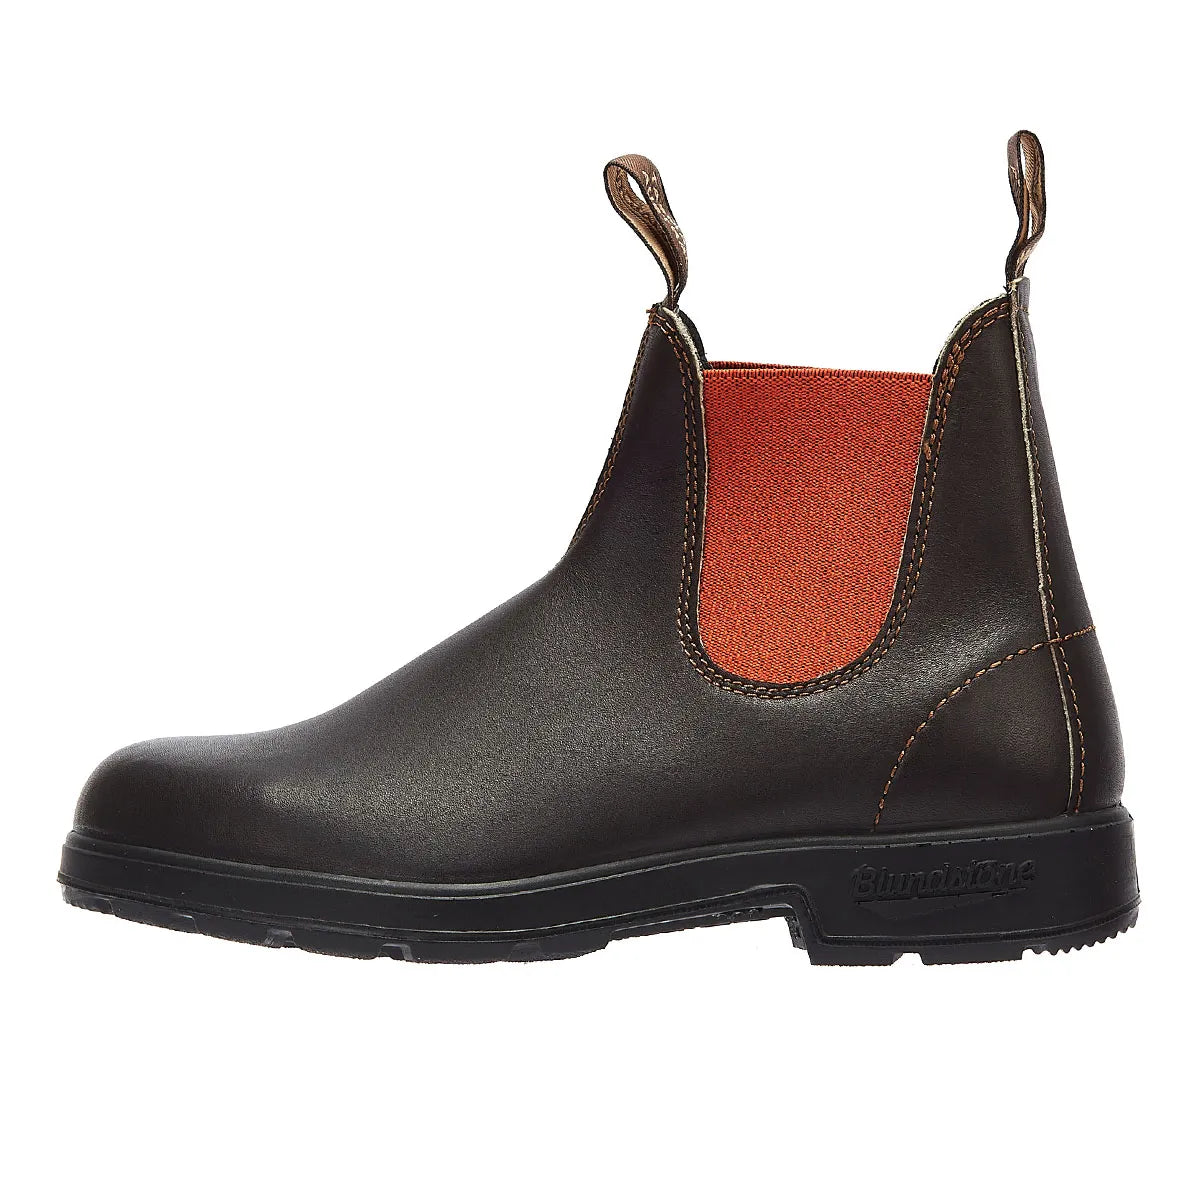 Blundstone 1918 Brown/Terracotta Chelsea Boots